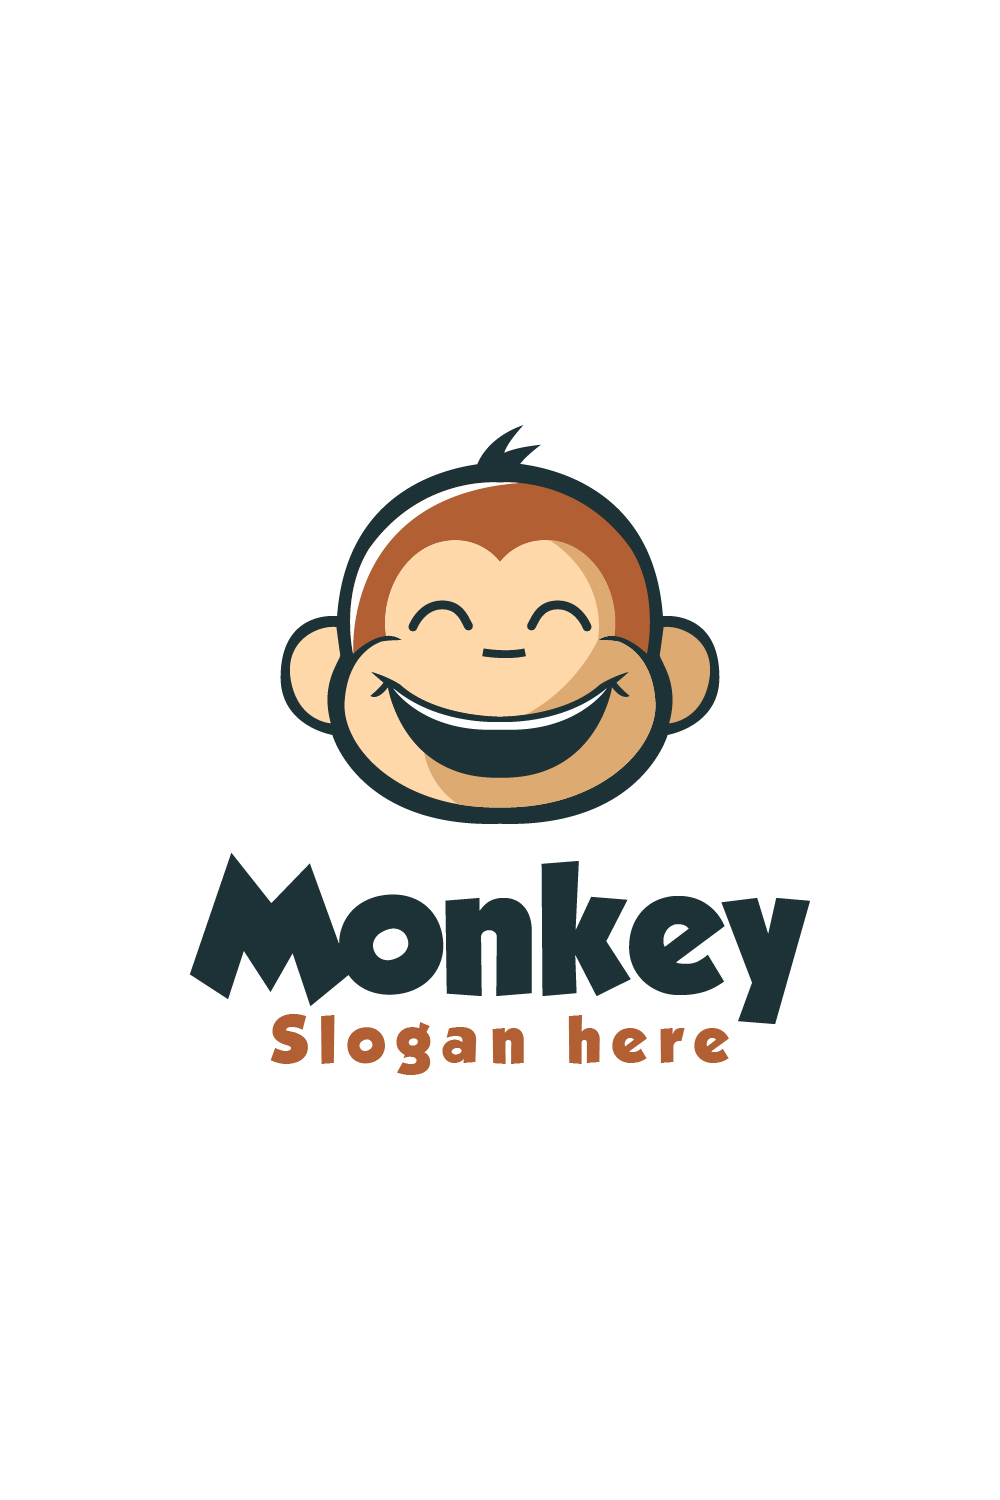 Cute Monkey Smile Face Mascot logo Template pinterest preview image.